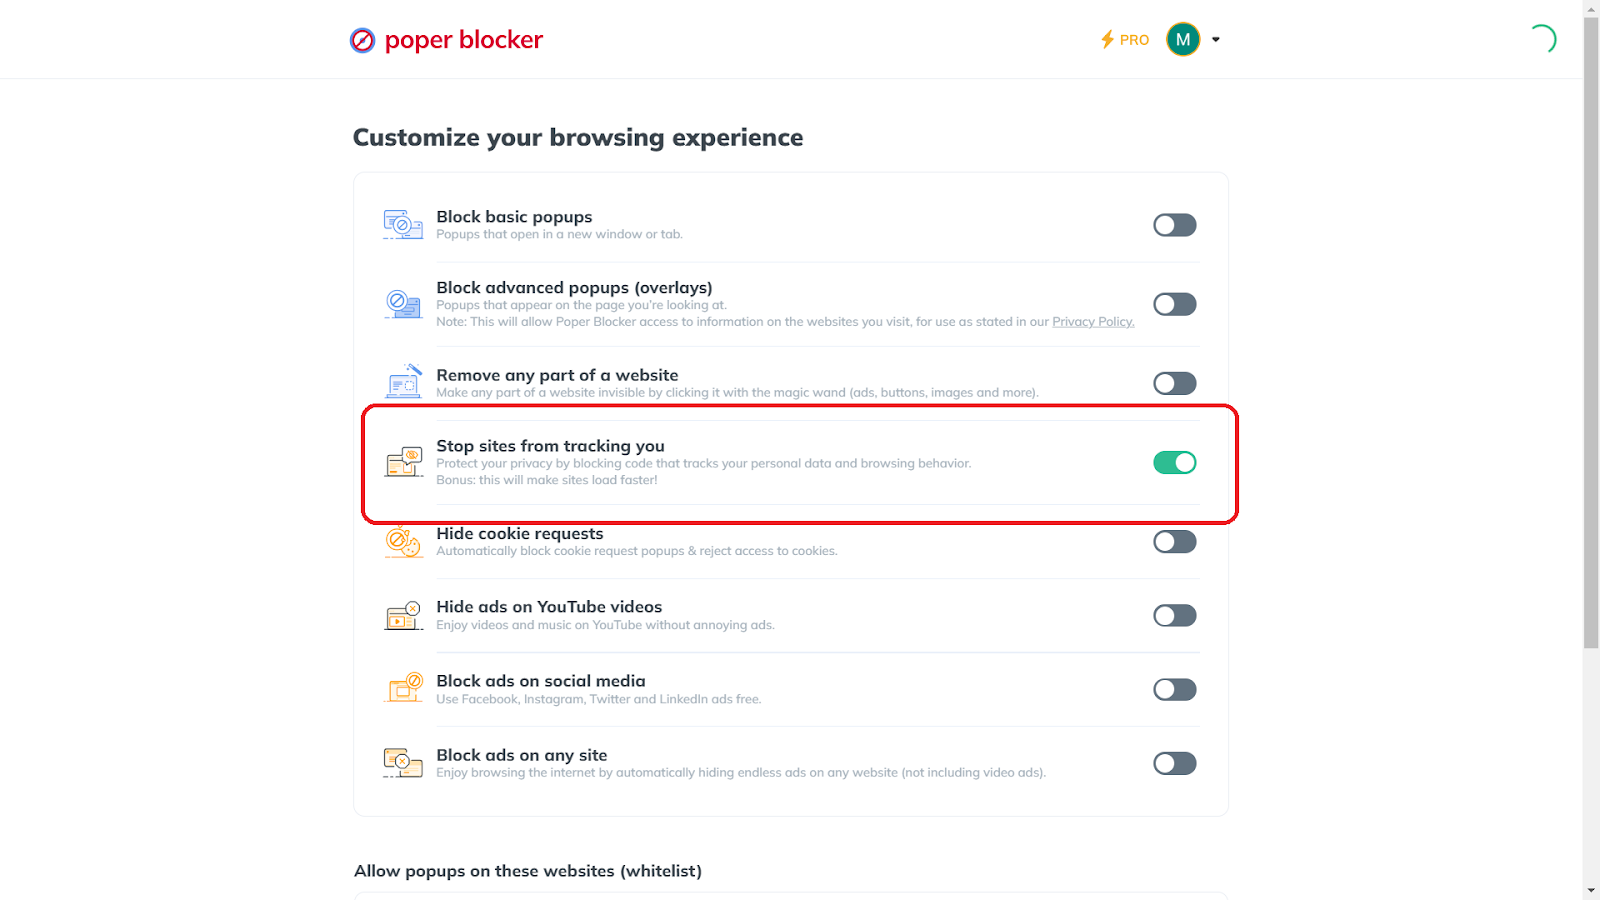 Poper blocker's tracker blocking feature